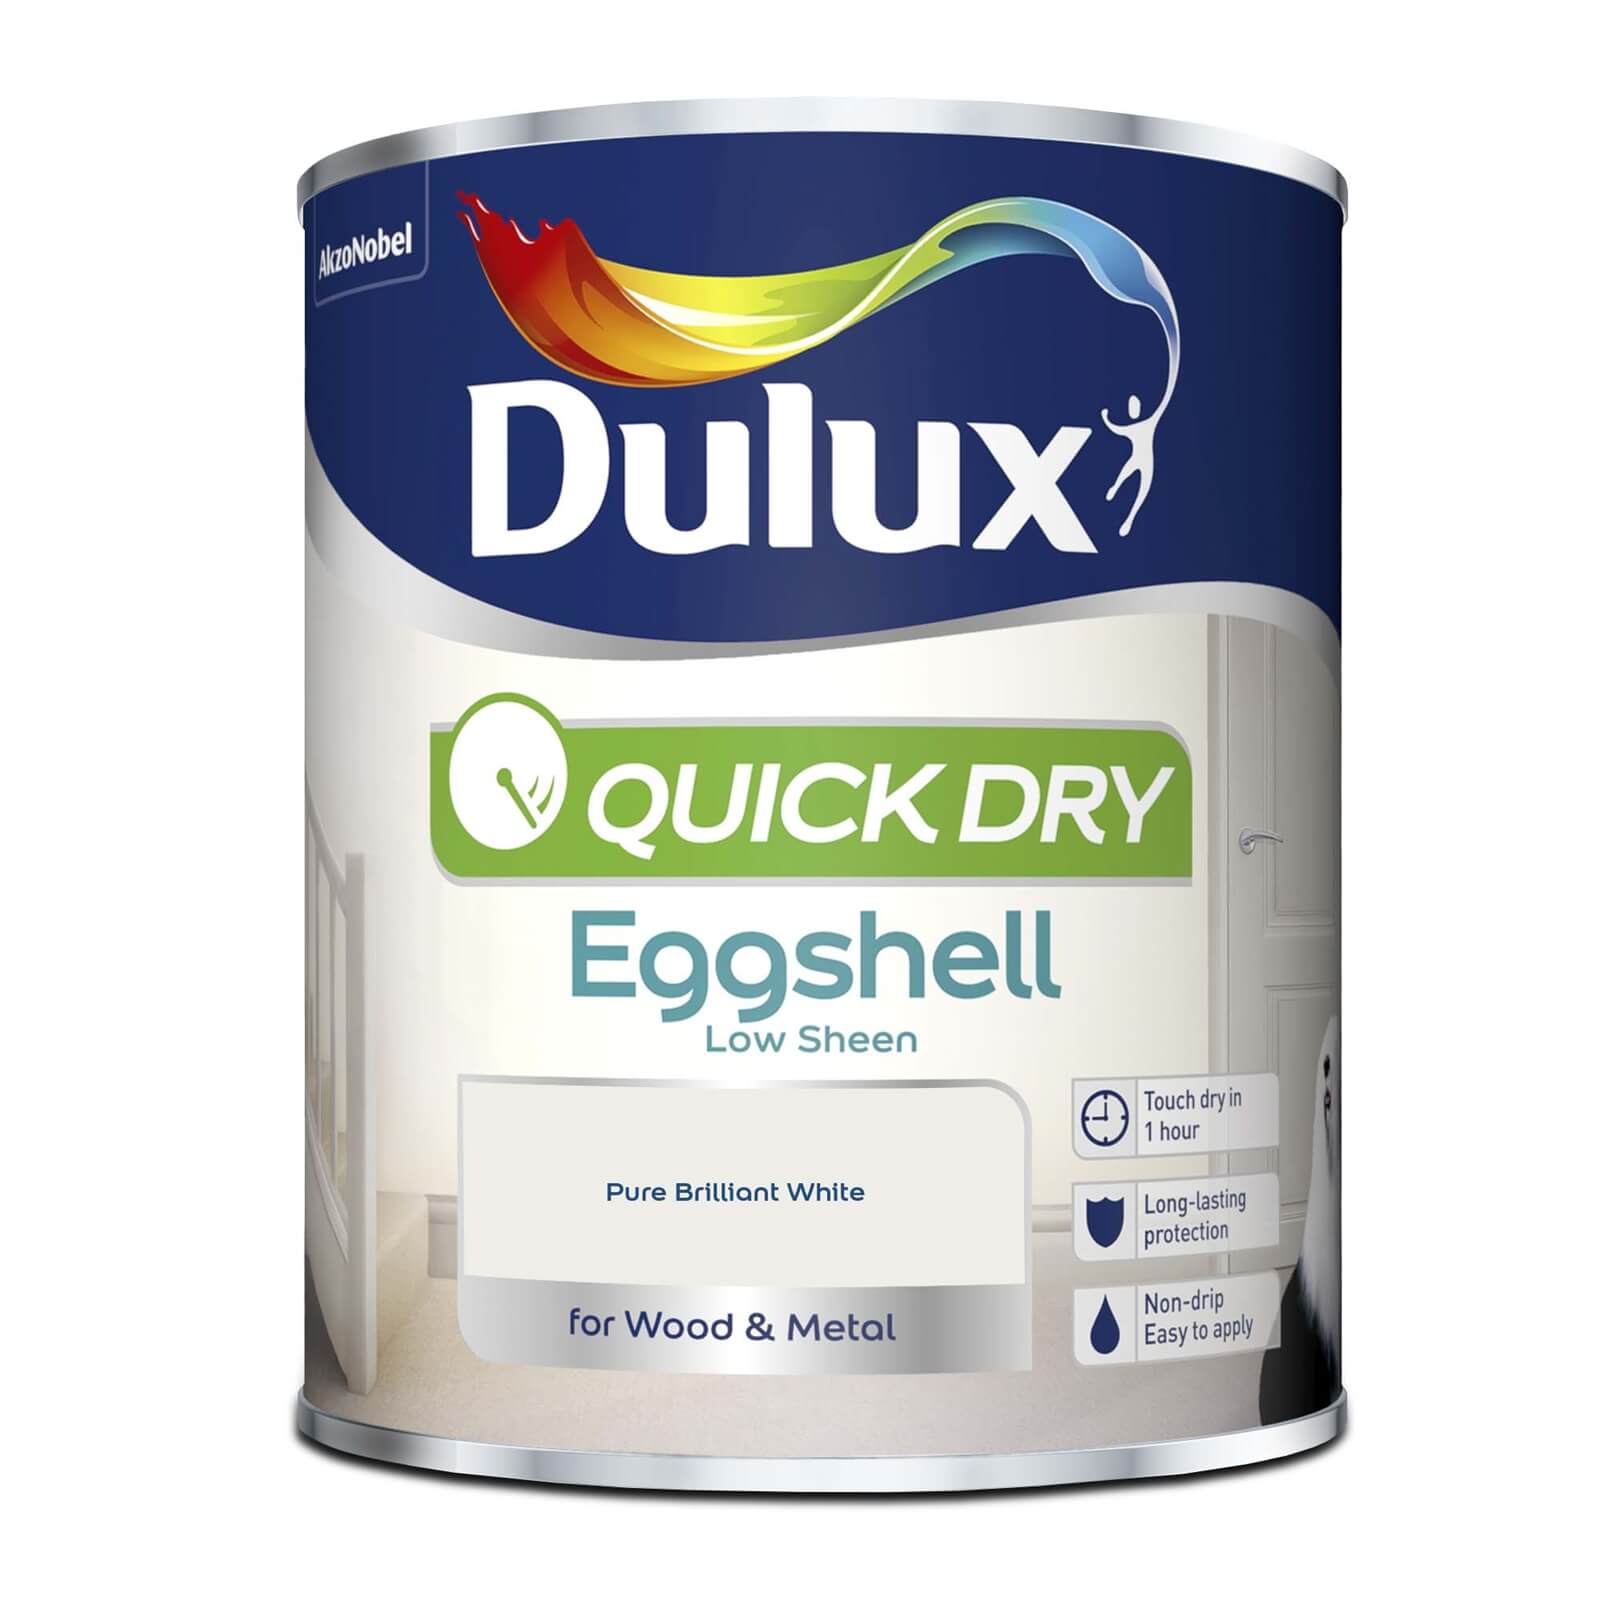 Dulux Quick Dry Eggshell Pure Brilliant White - 750ml